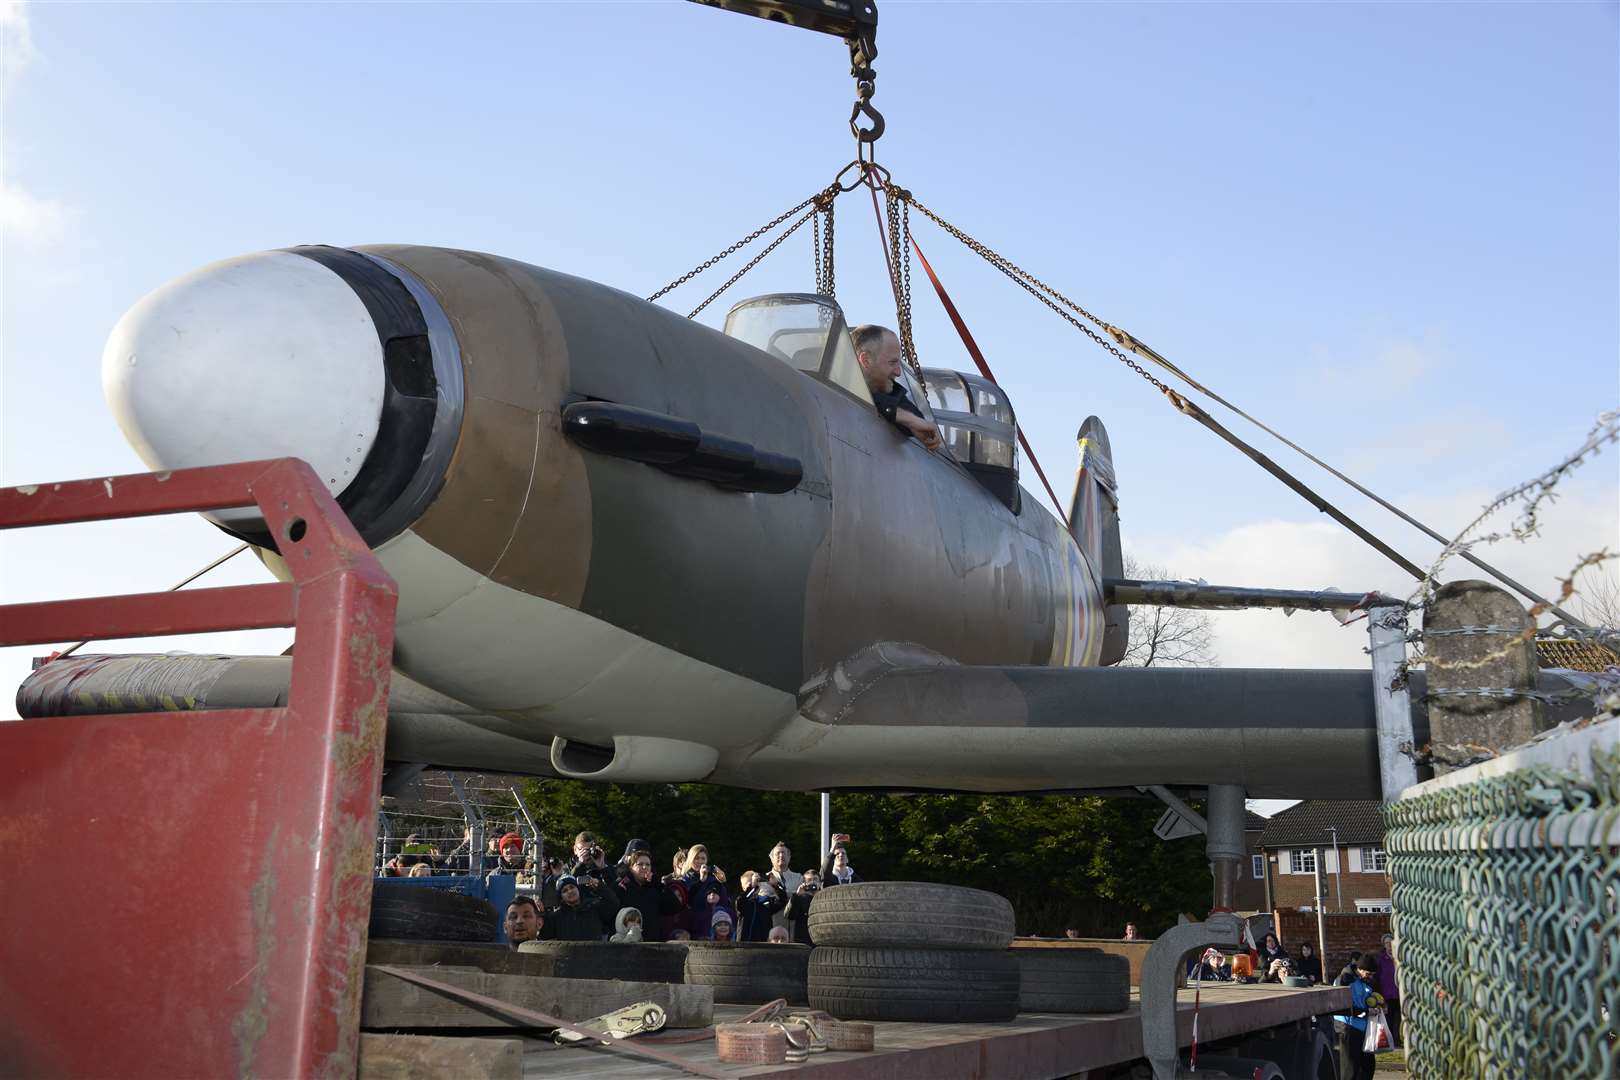 The Boulton Paul Defiant replica Second World War plane - in its new home in Hawkinge.